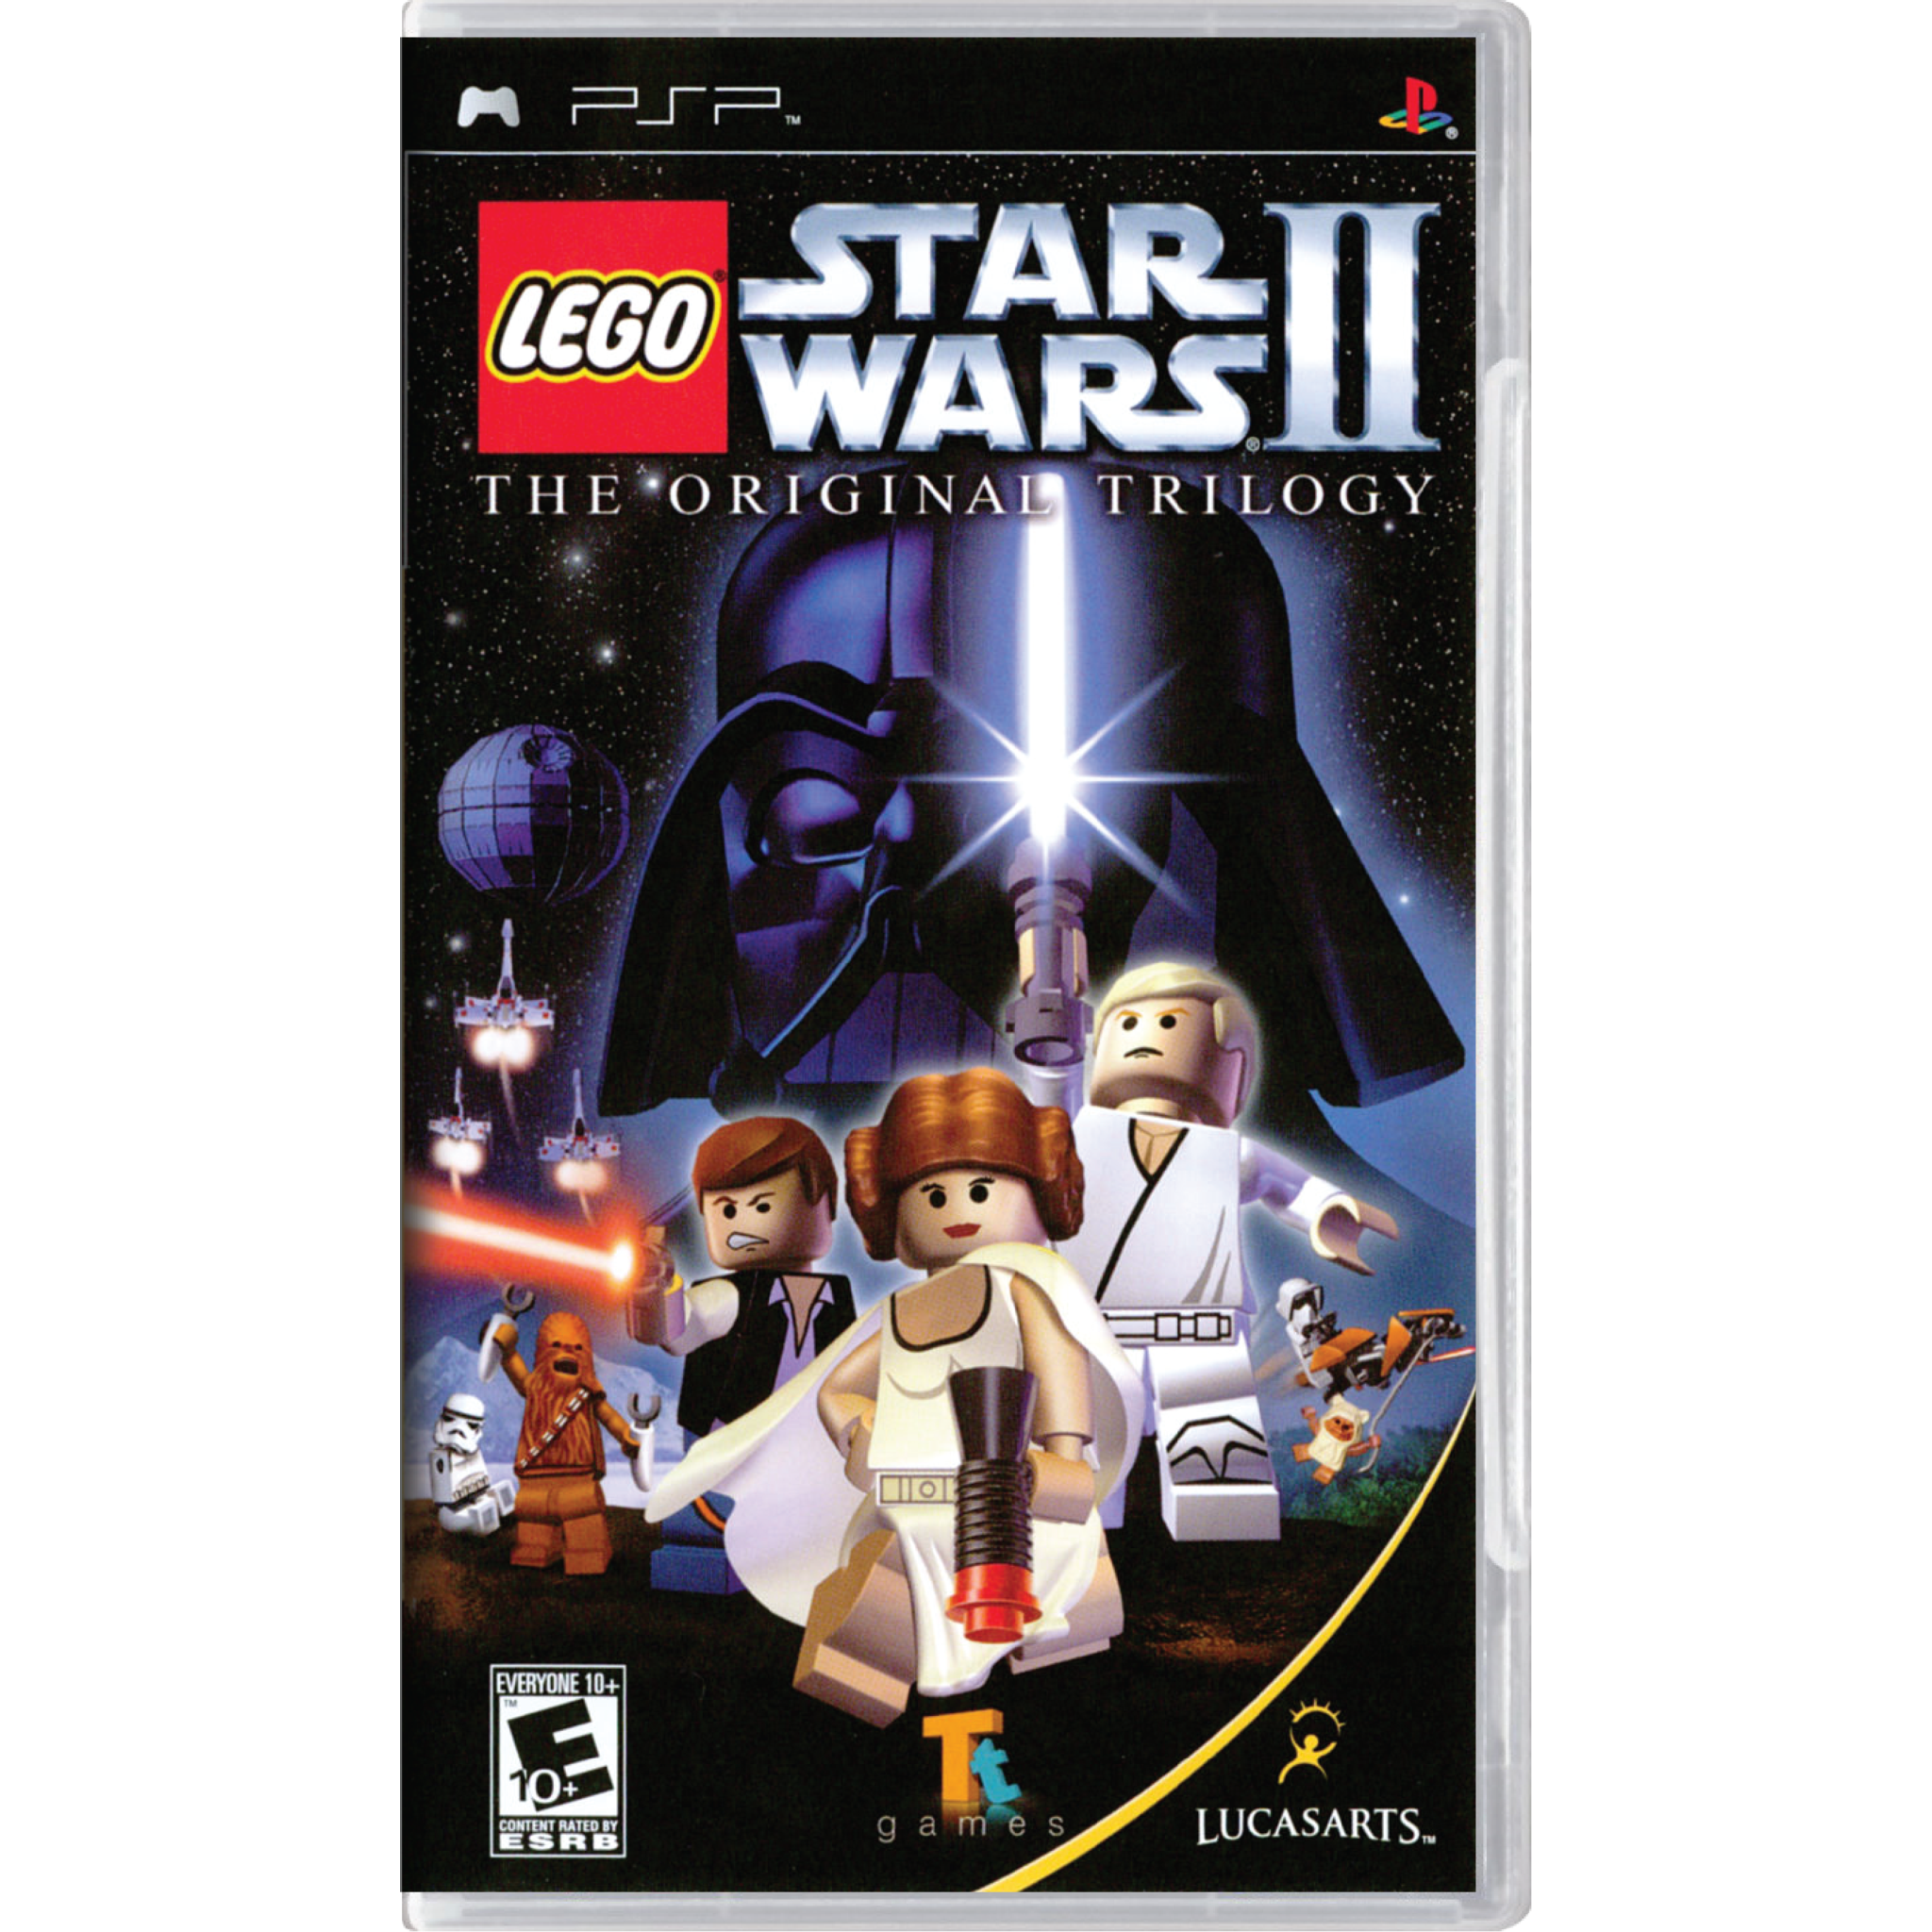 PSP - Lego Star Wars II The Original Trilogy (In Case)